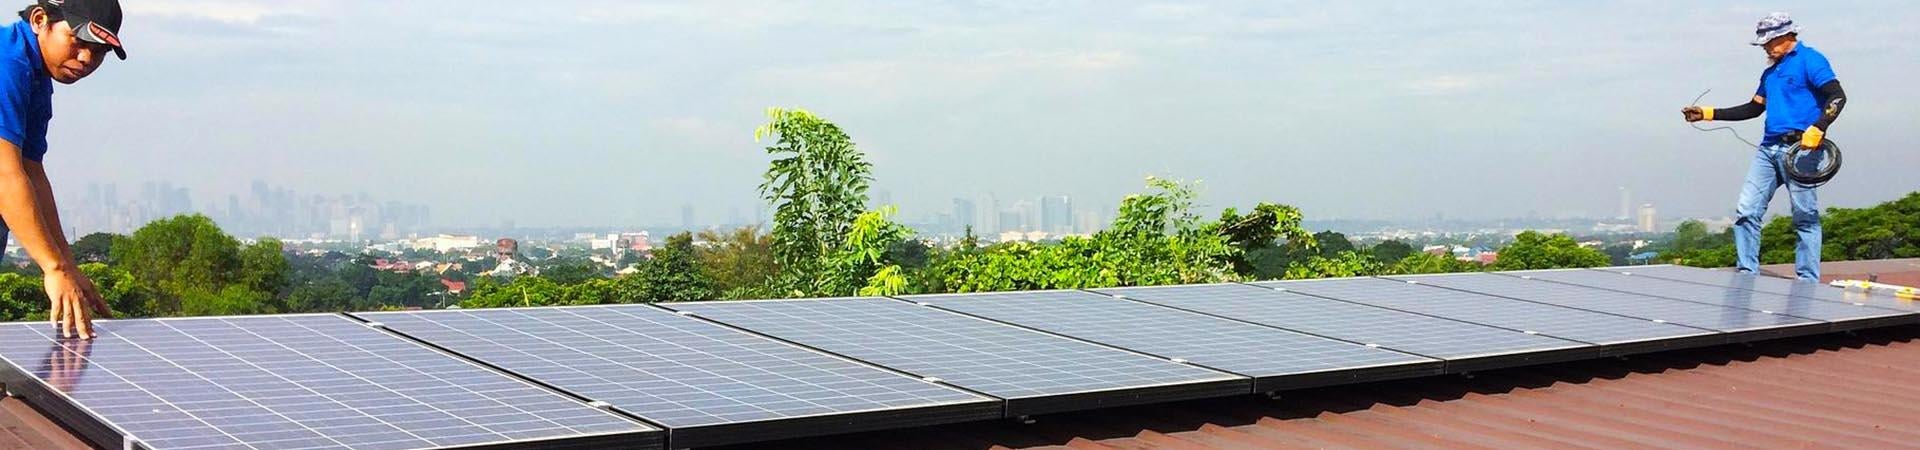 Solar panel installation on rooftop